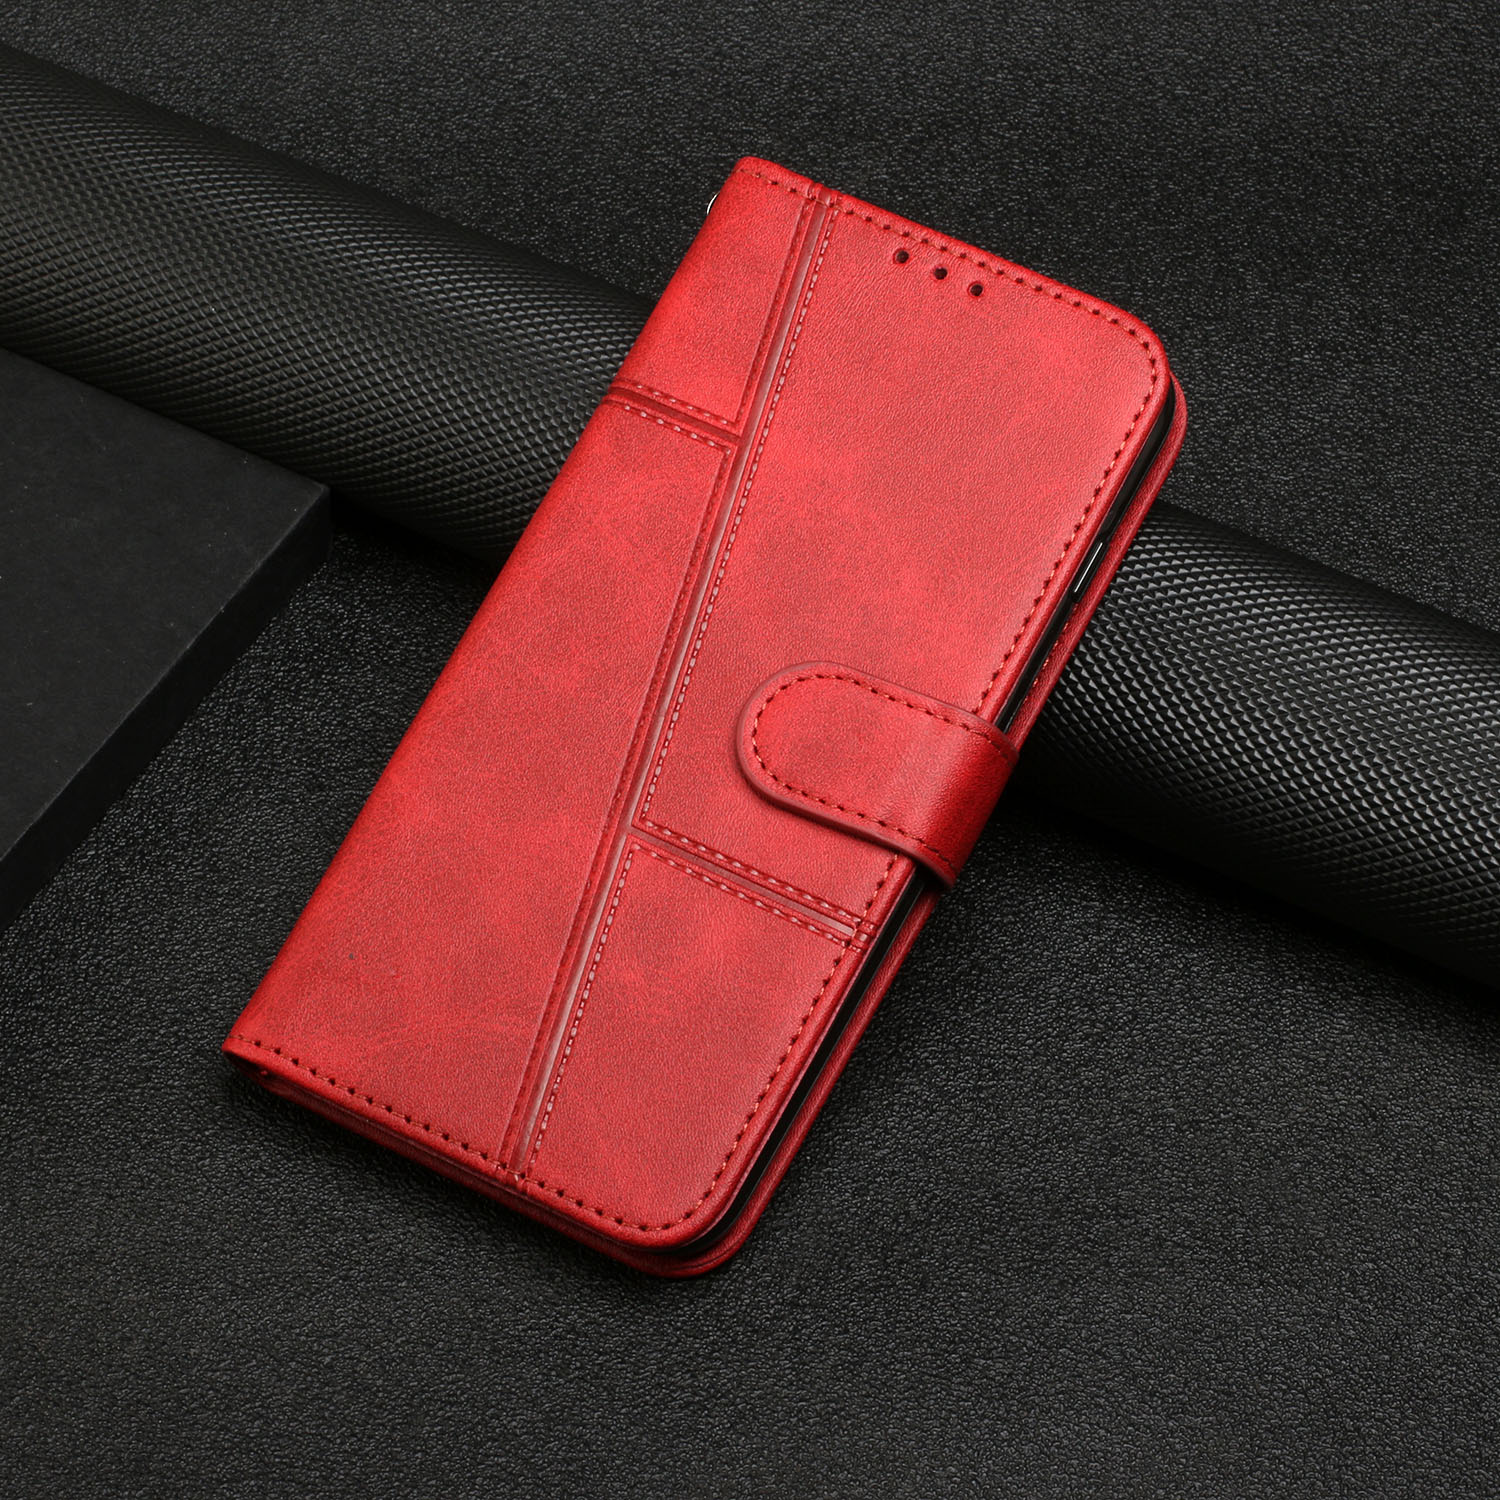 Funda Flip Cover tapa Rojo para xiaomi Redmi Note 7 cool